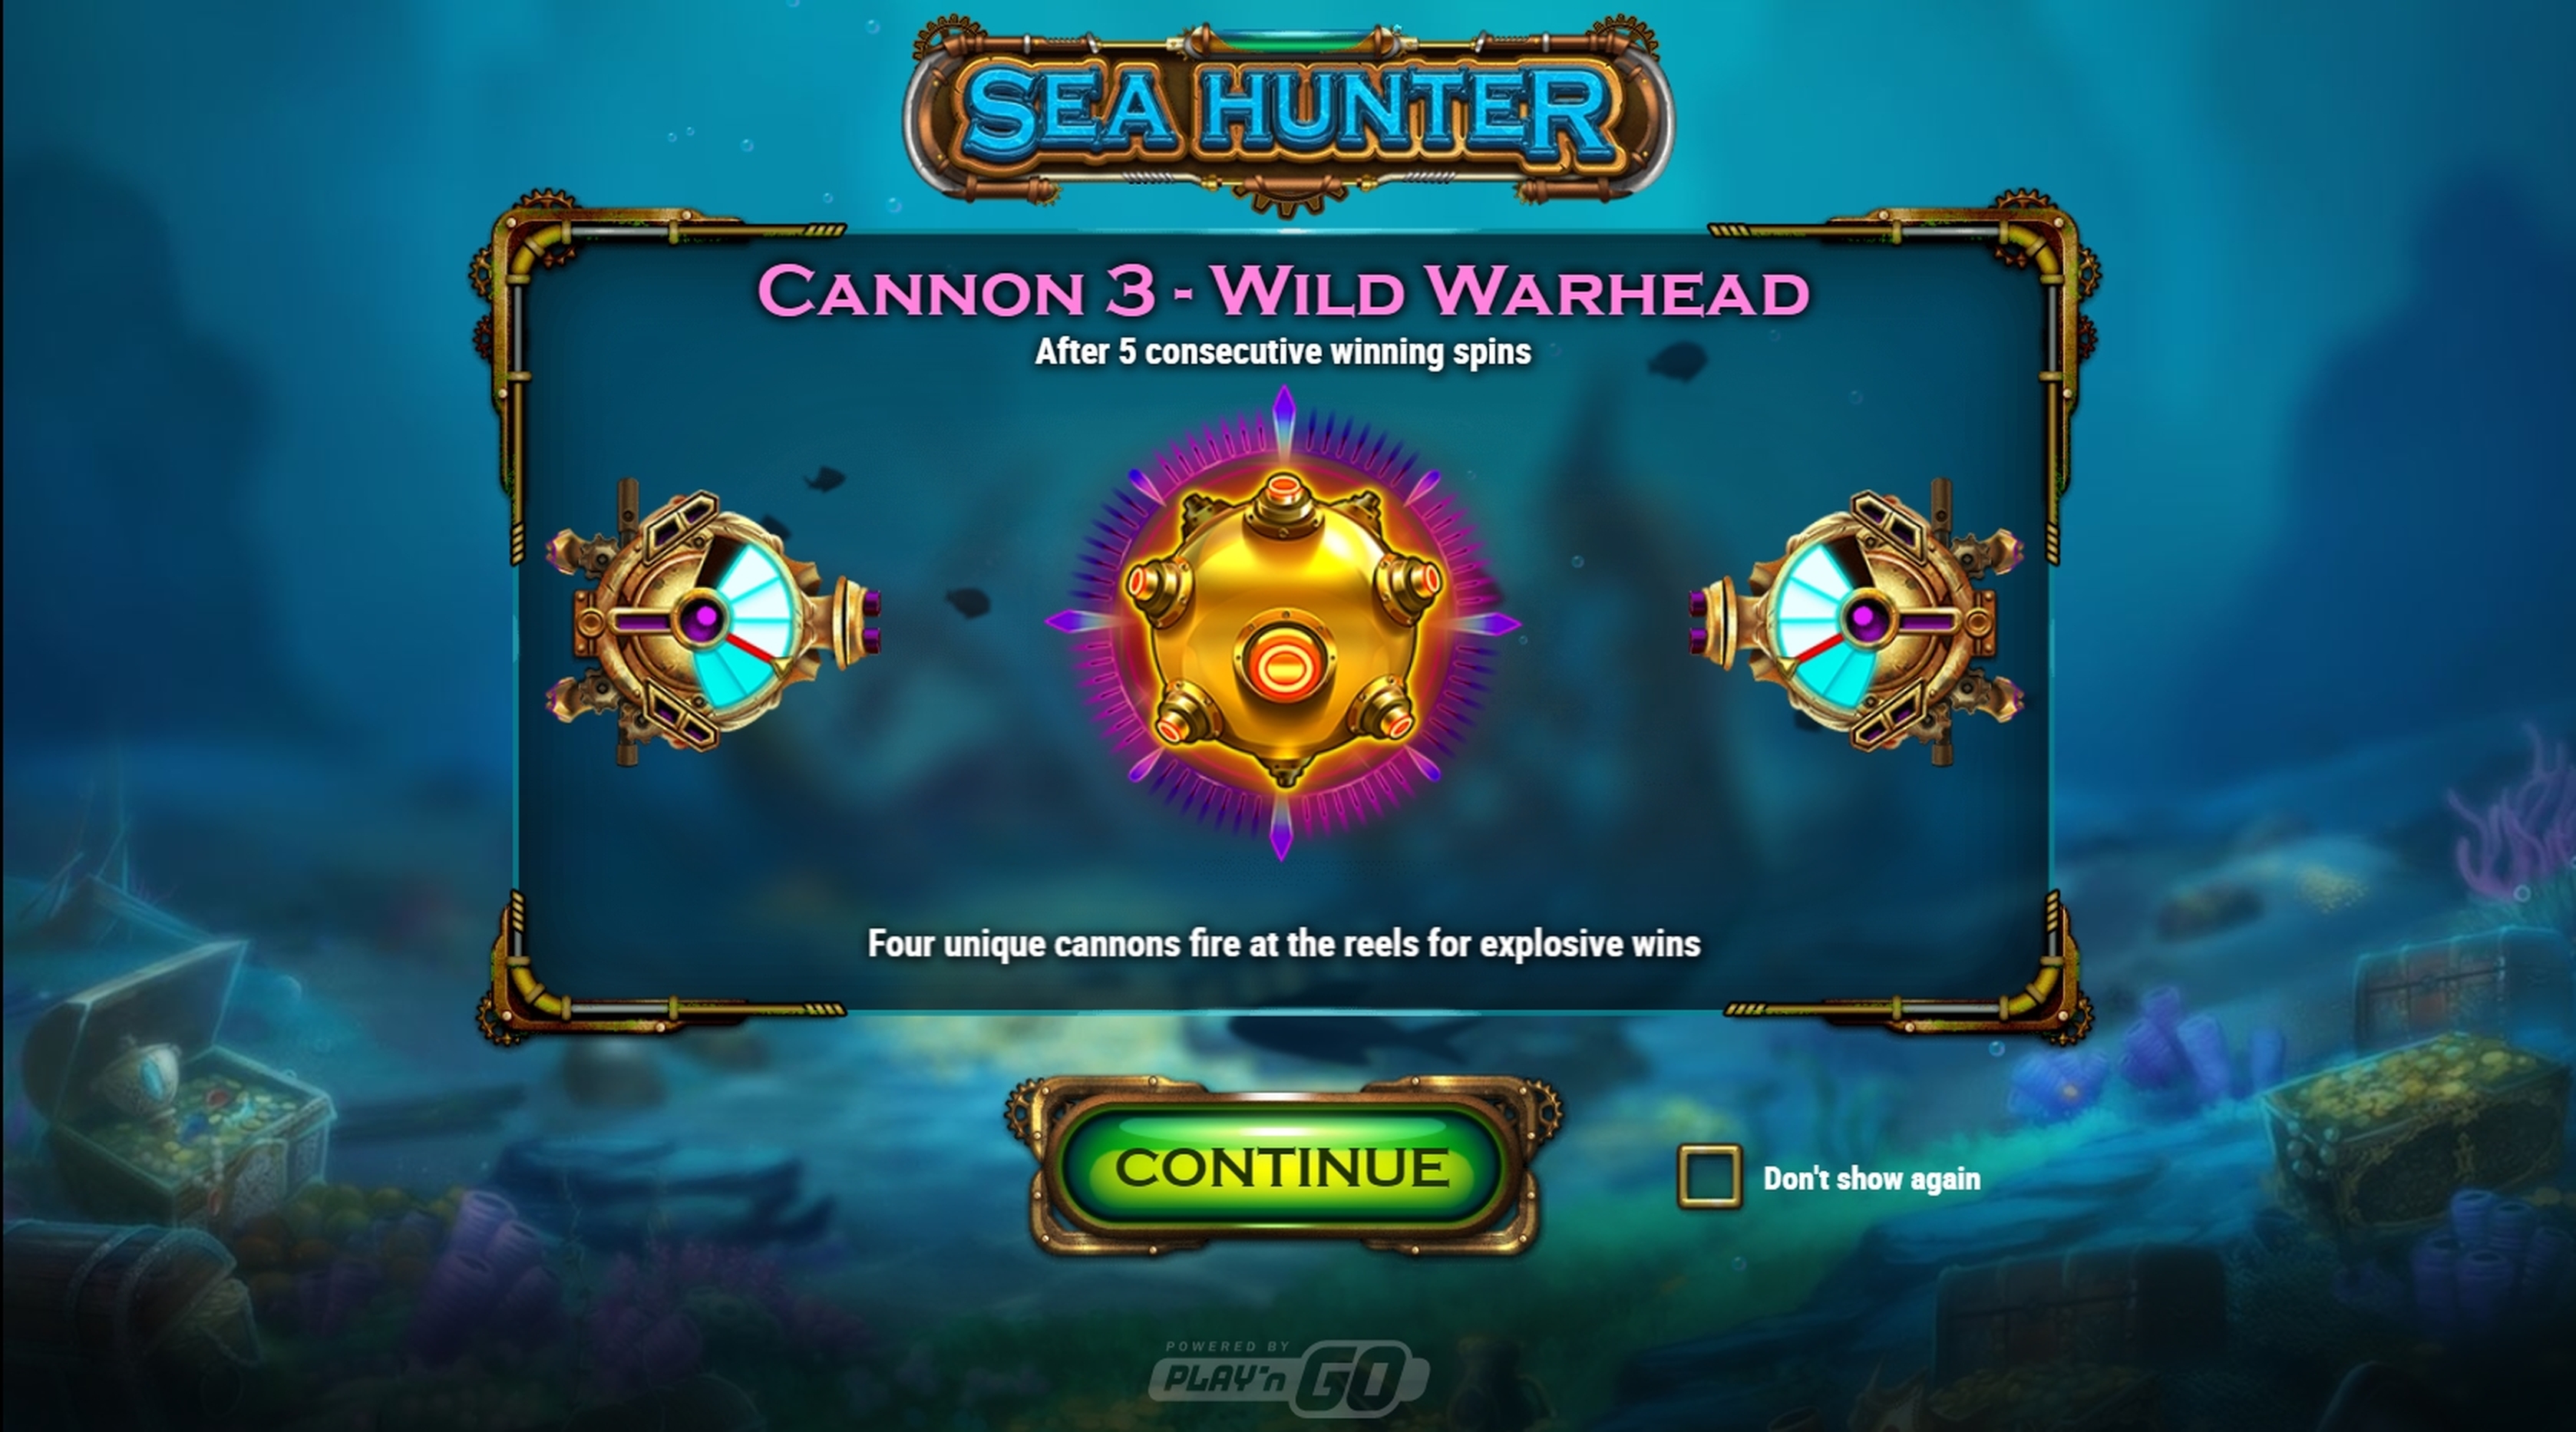 Play Sea Hunter Free Casino Slot Game by Playn GO